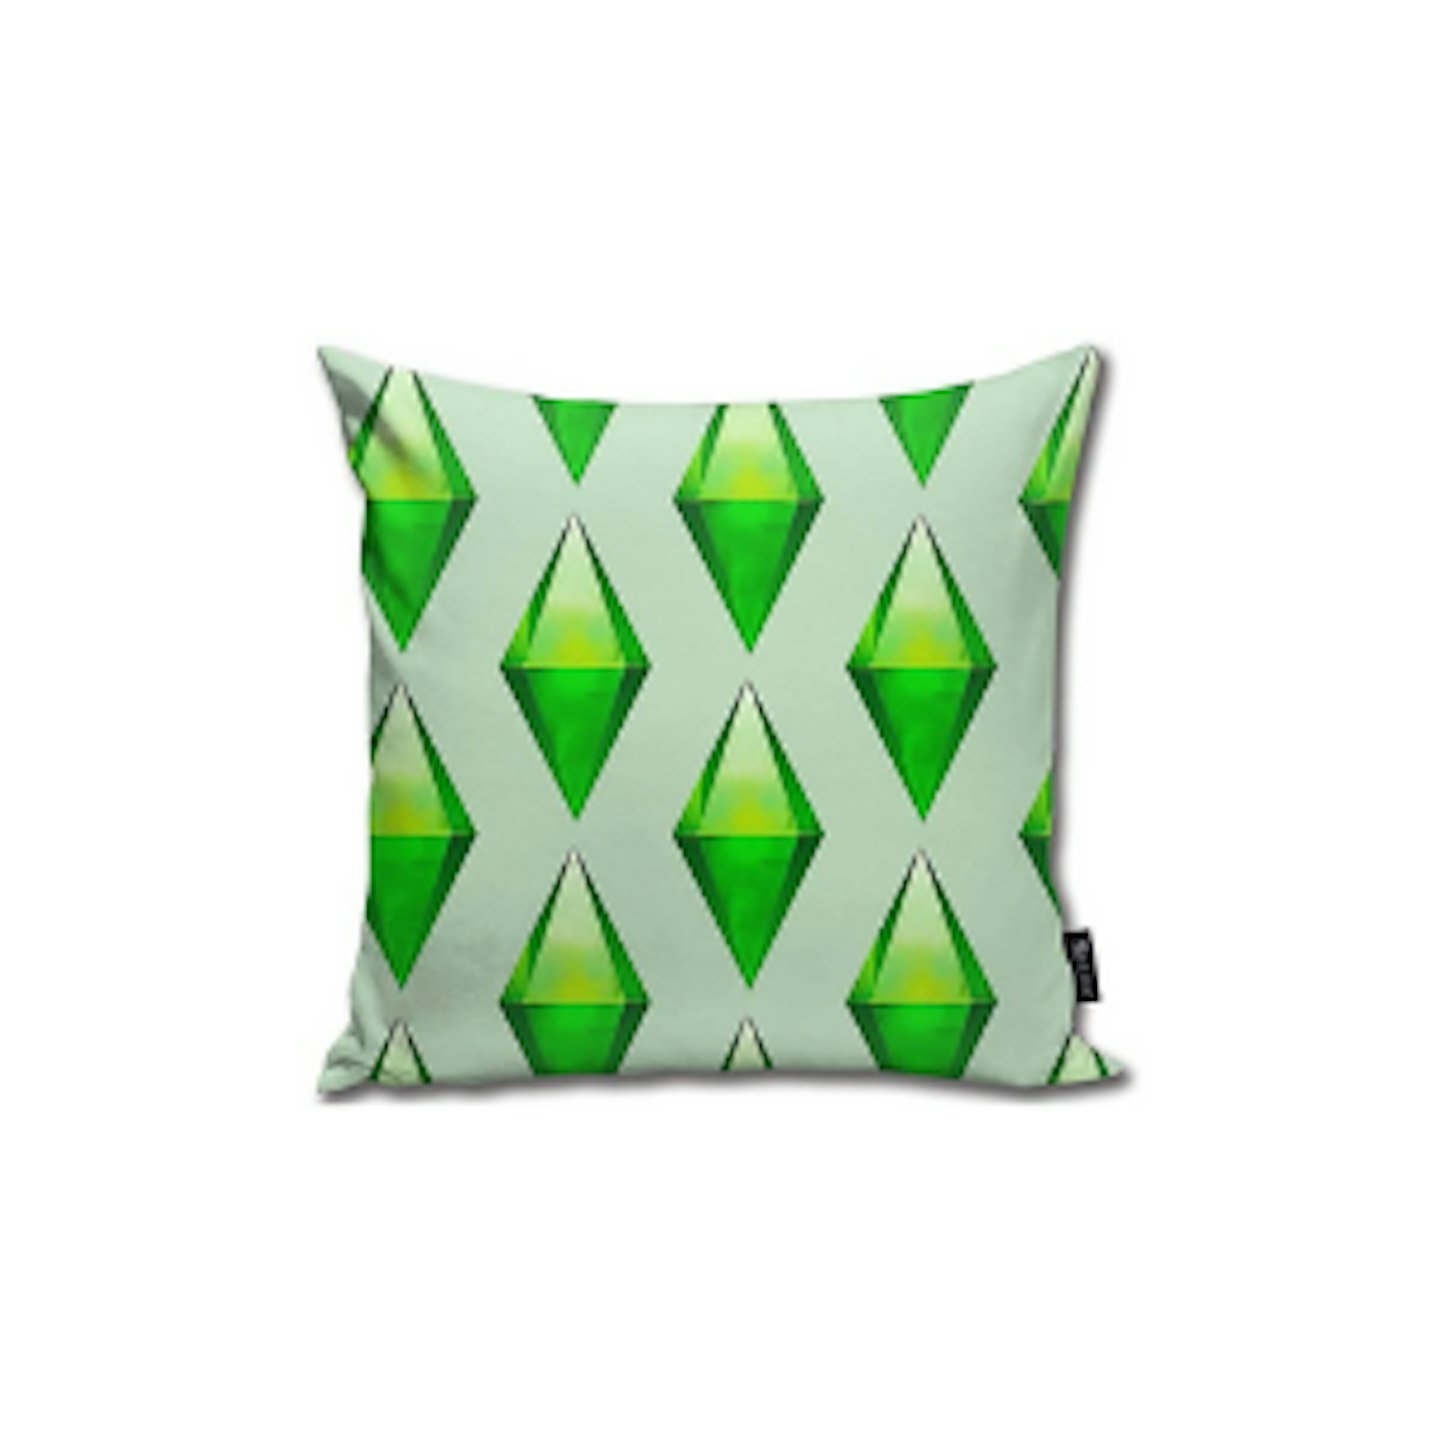 The Sims Plumbob Throw Pillows